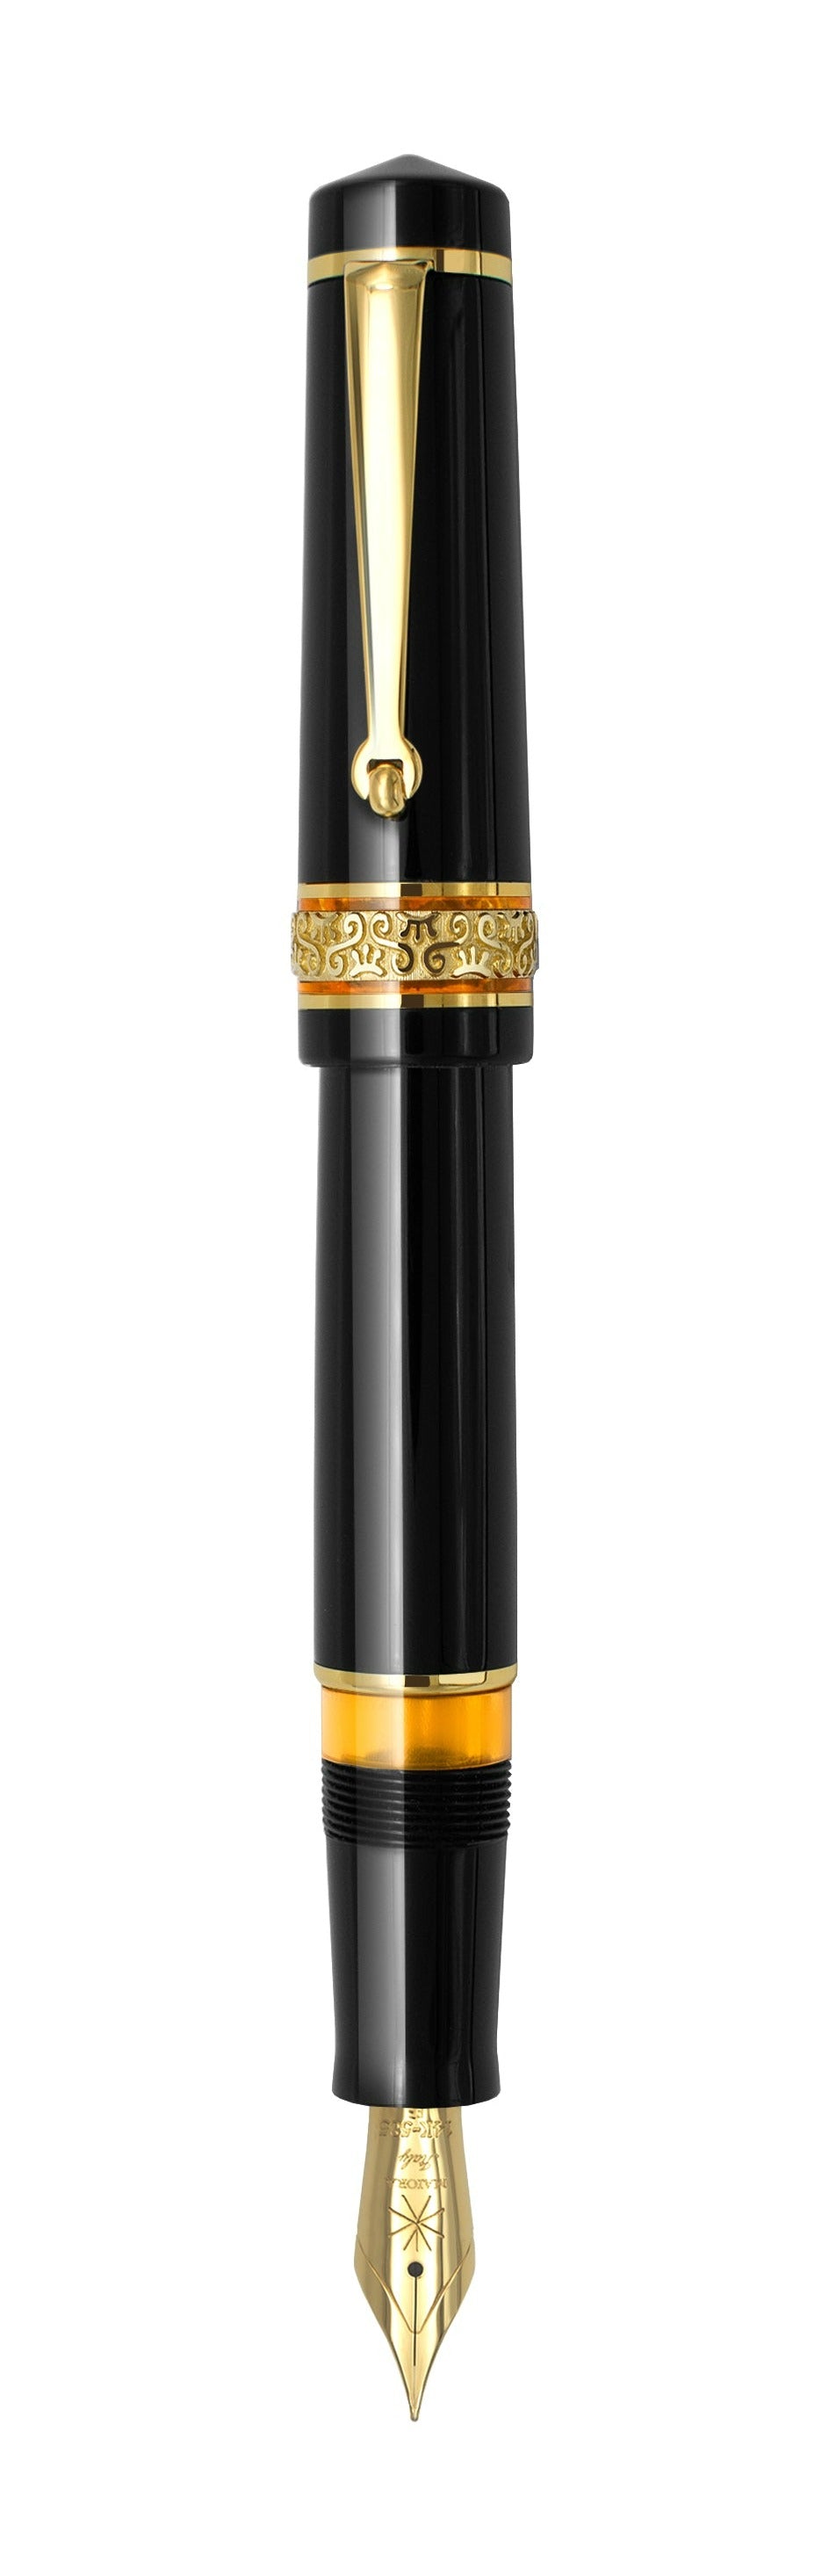 Maiora Alpha K Nera Gold Fountain Pen with ink window